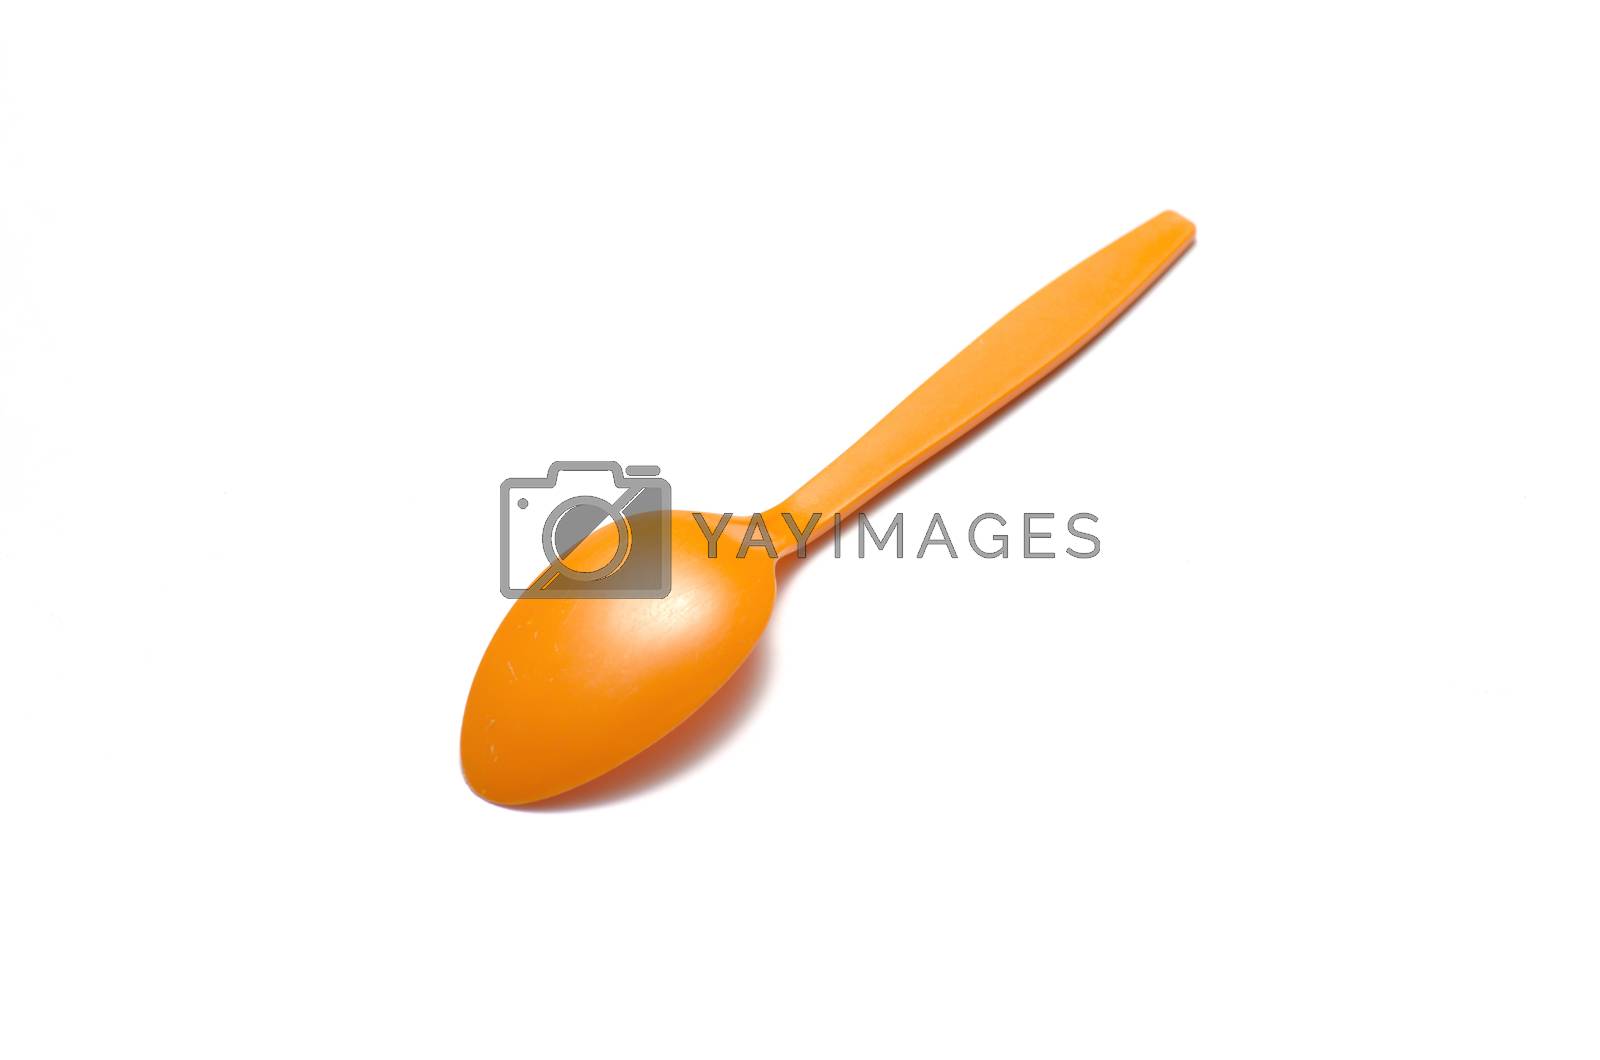 Royalty free image of orange plastic spoon by ammza12